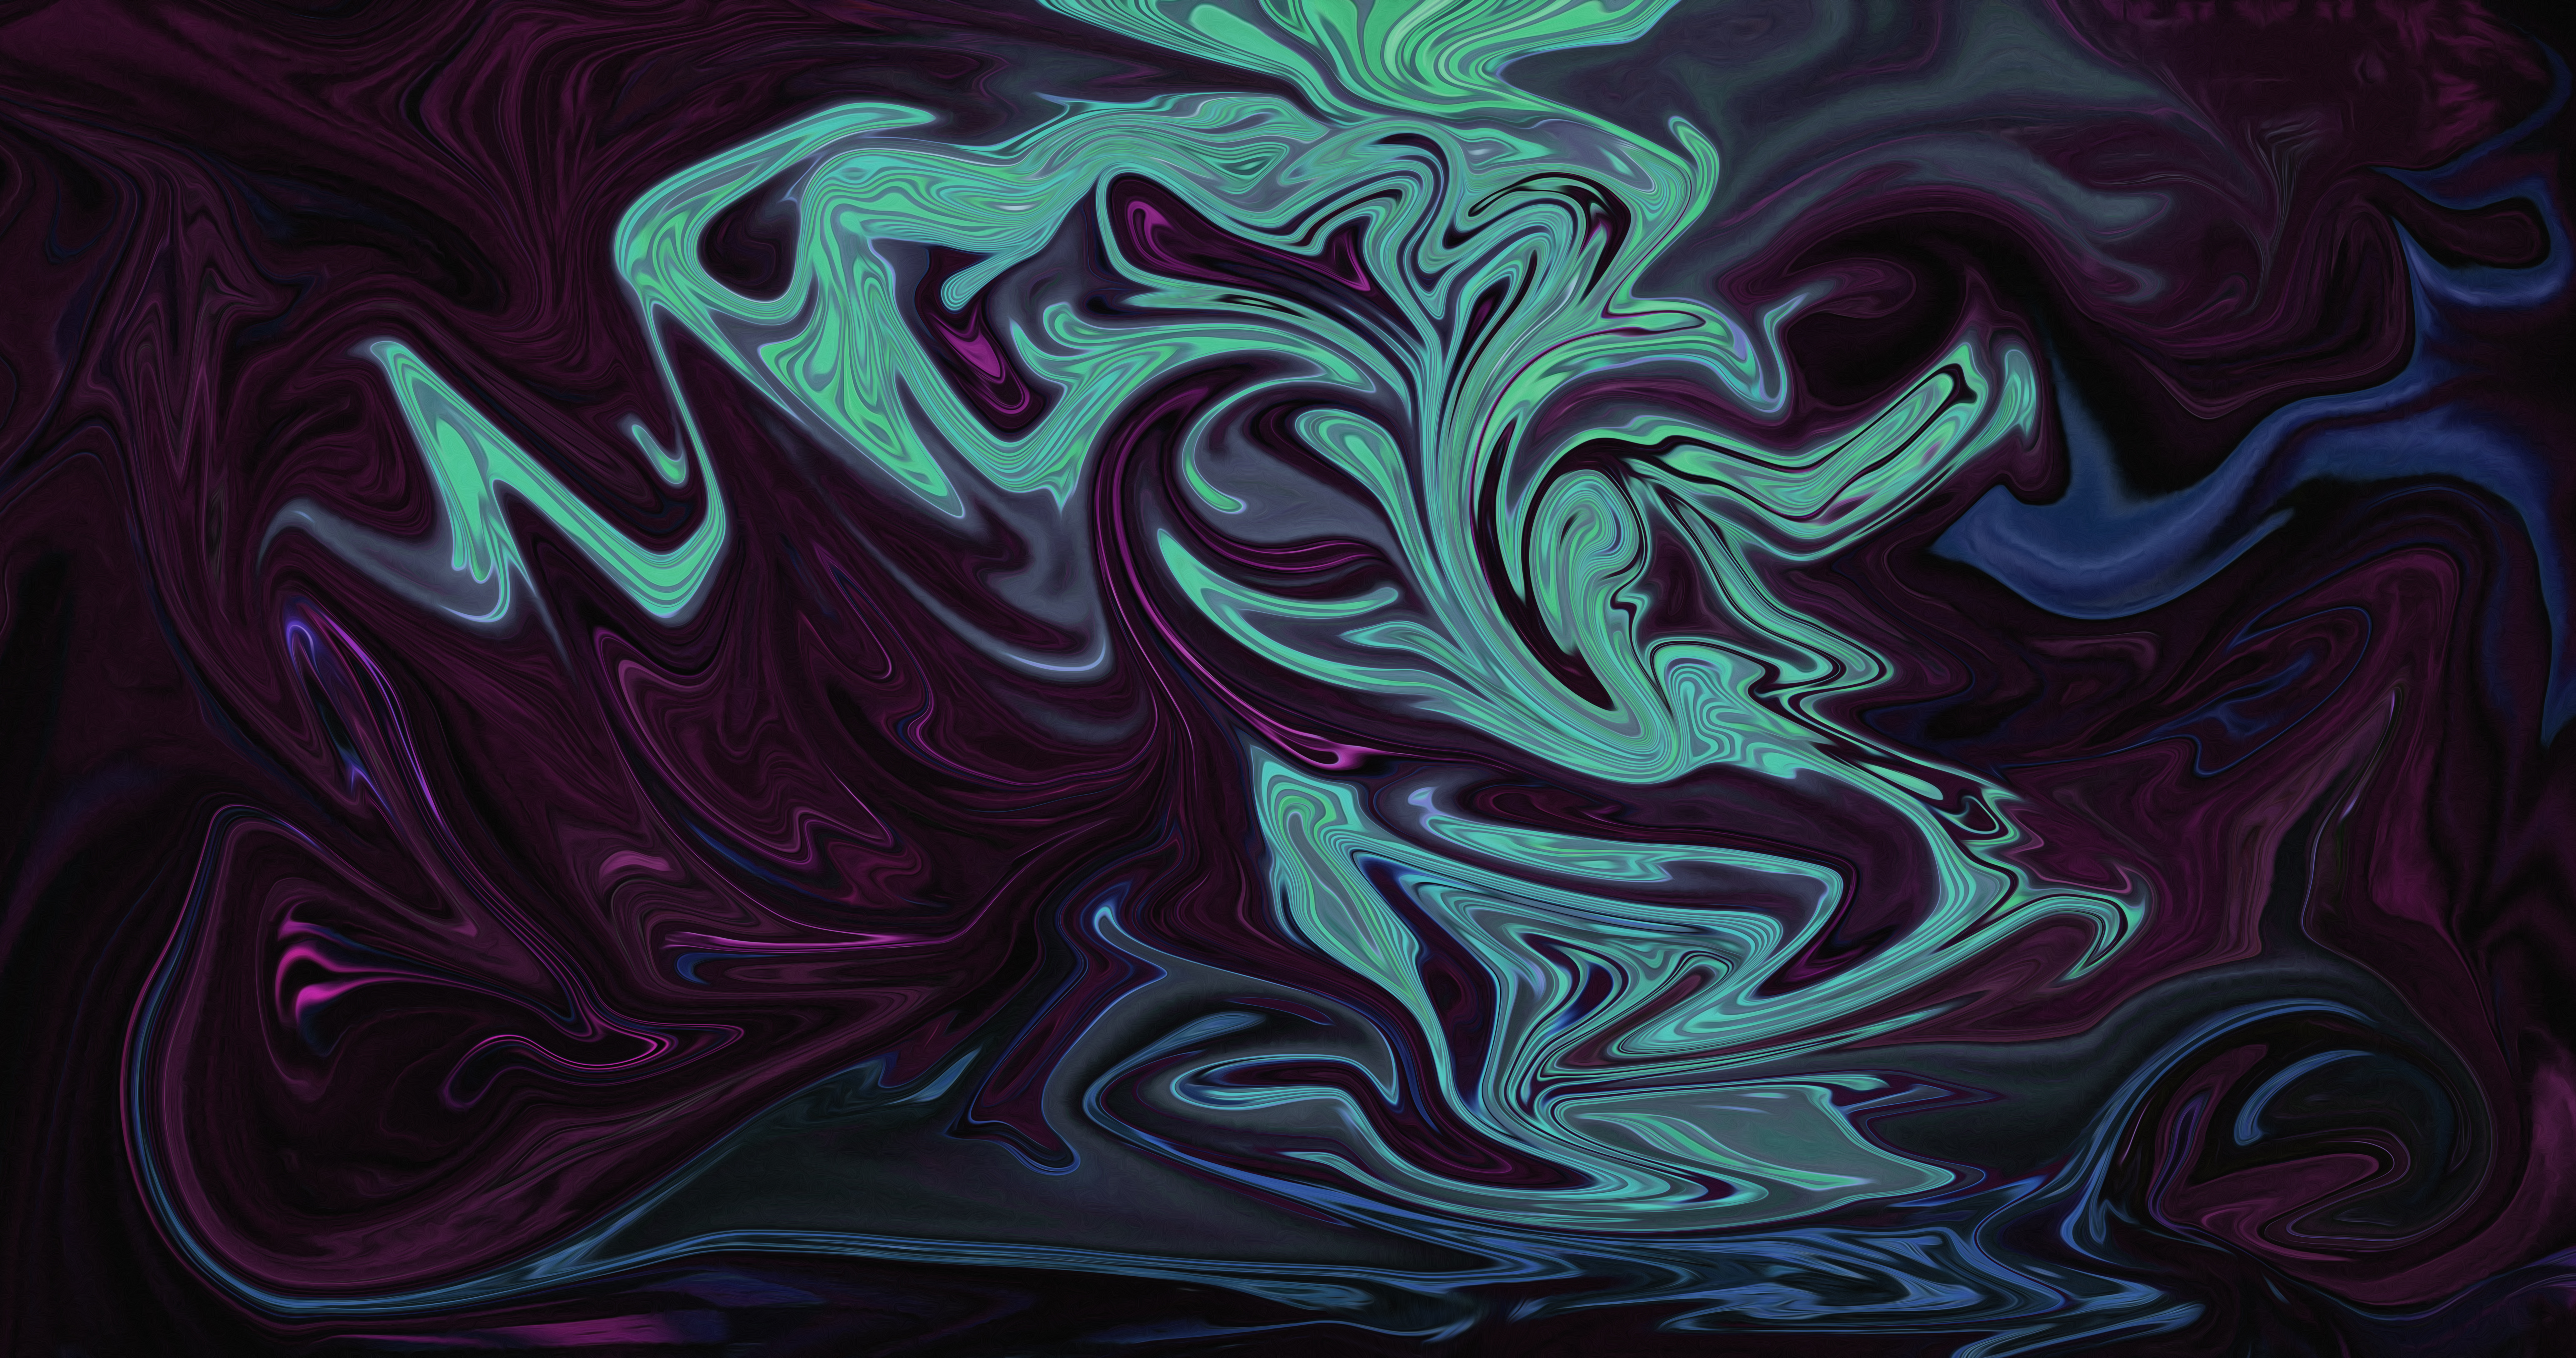 Abstract Fluid Liquid Dark Black Digital Art Artwork 8192x4320